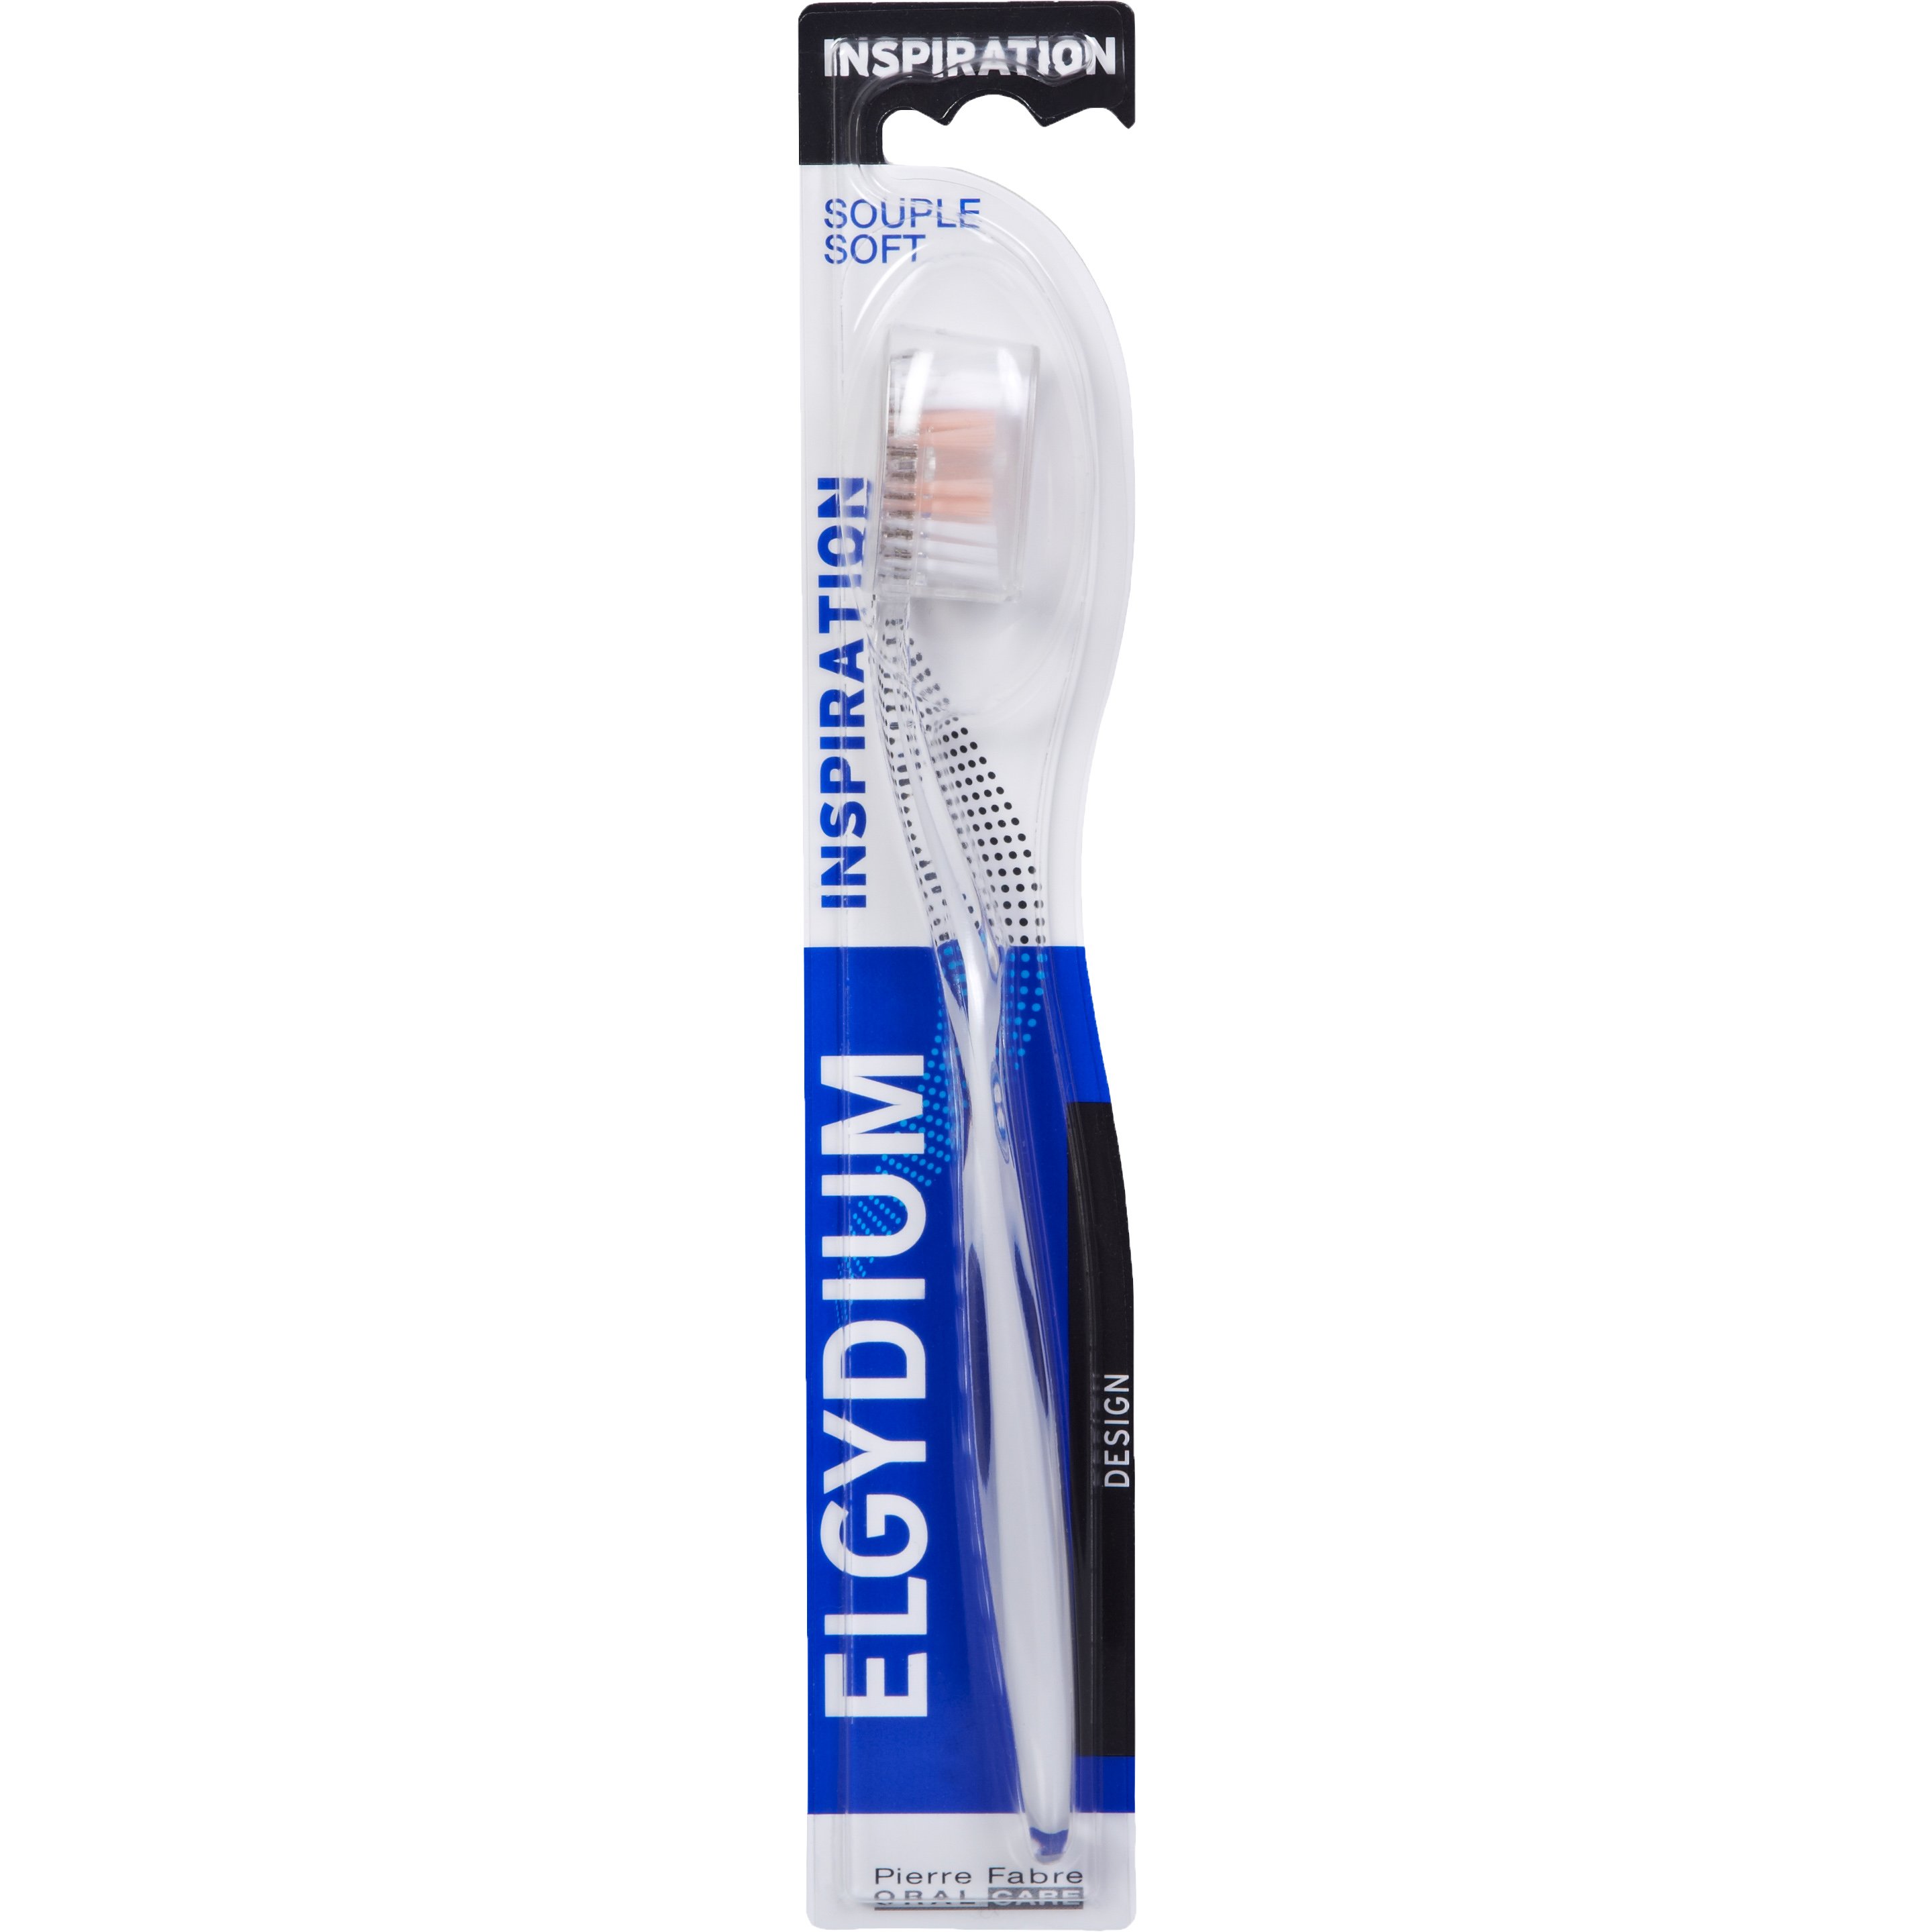 Elgydium Inspiration Medium Εργονομική Οδοντόβουρτσα Για Άνετο Καθαρισμό Και Στα Πιο Δύσκολα Σημεία Μεσαίο Μέγεθος 1 τμχ – Μπλε